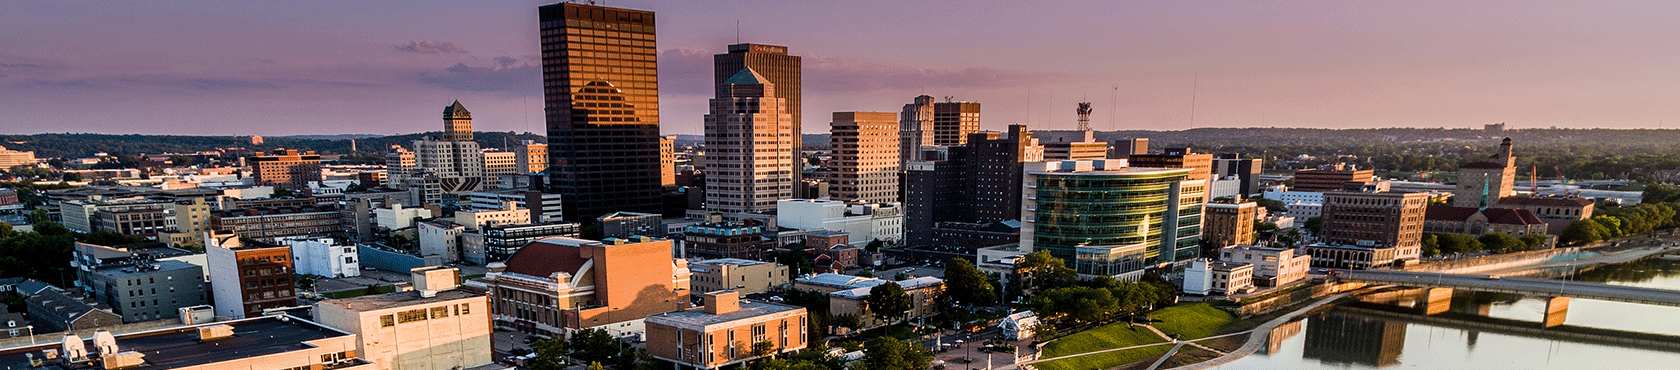 Dayton skyline at sunset